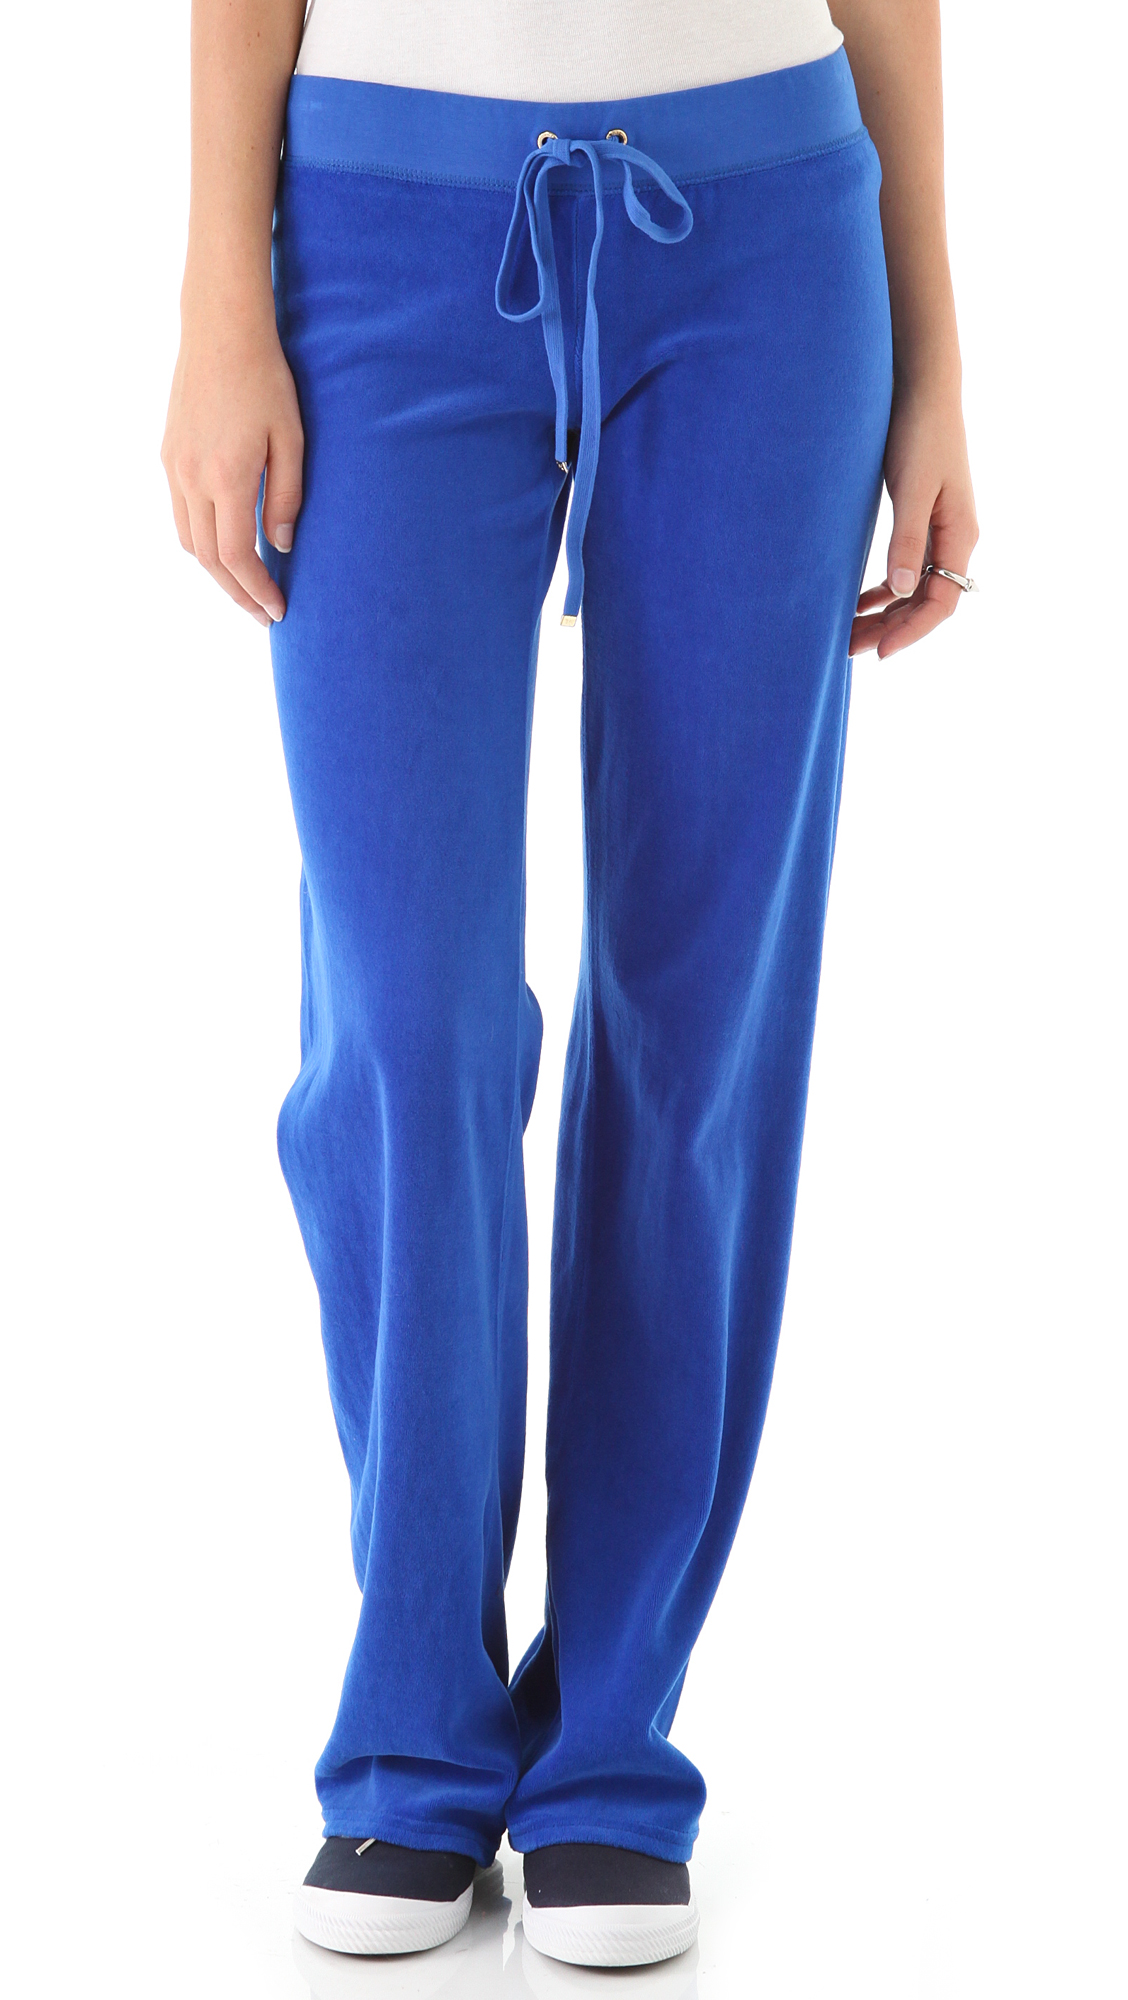 Juicy Couture Original Wide Leg Velour Pants in Blue - Lyst